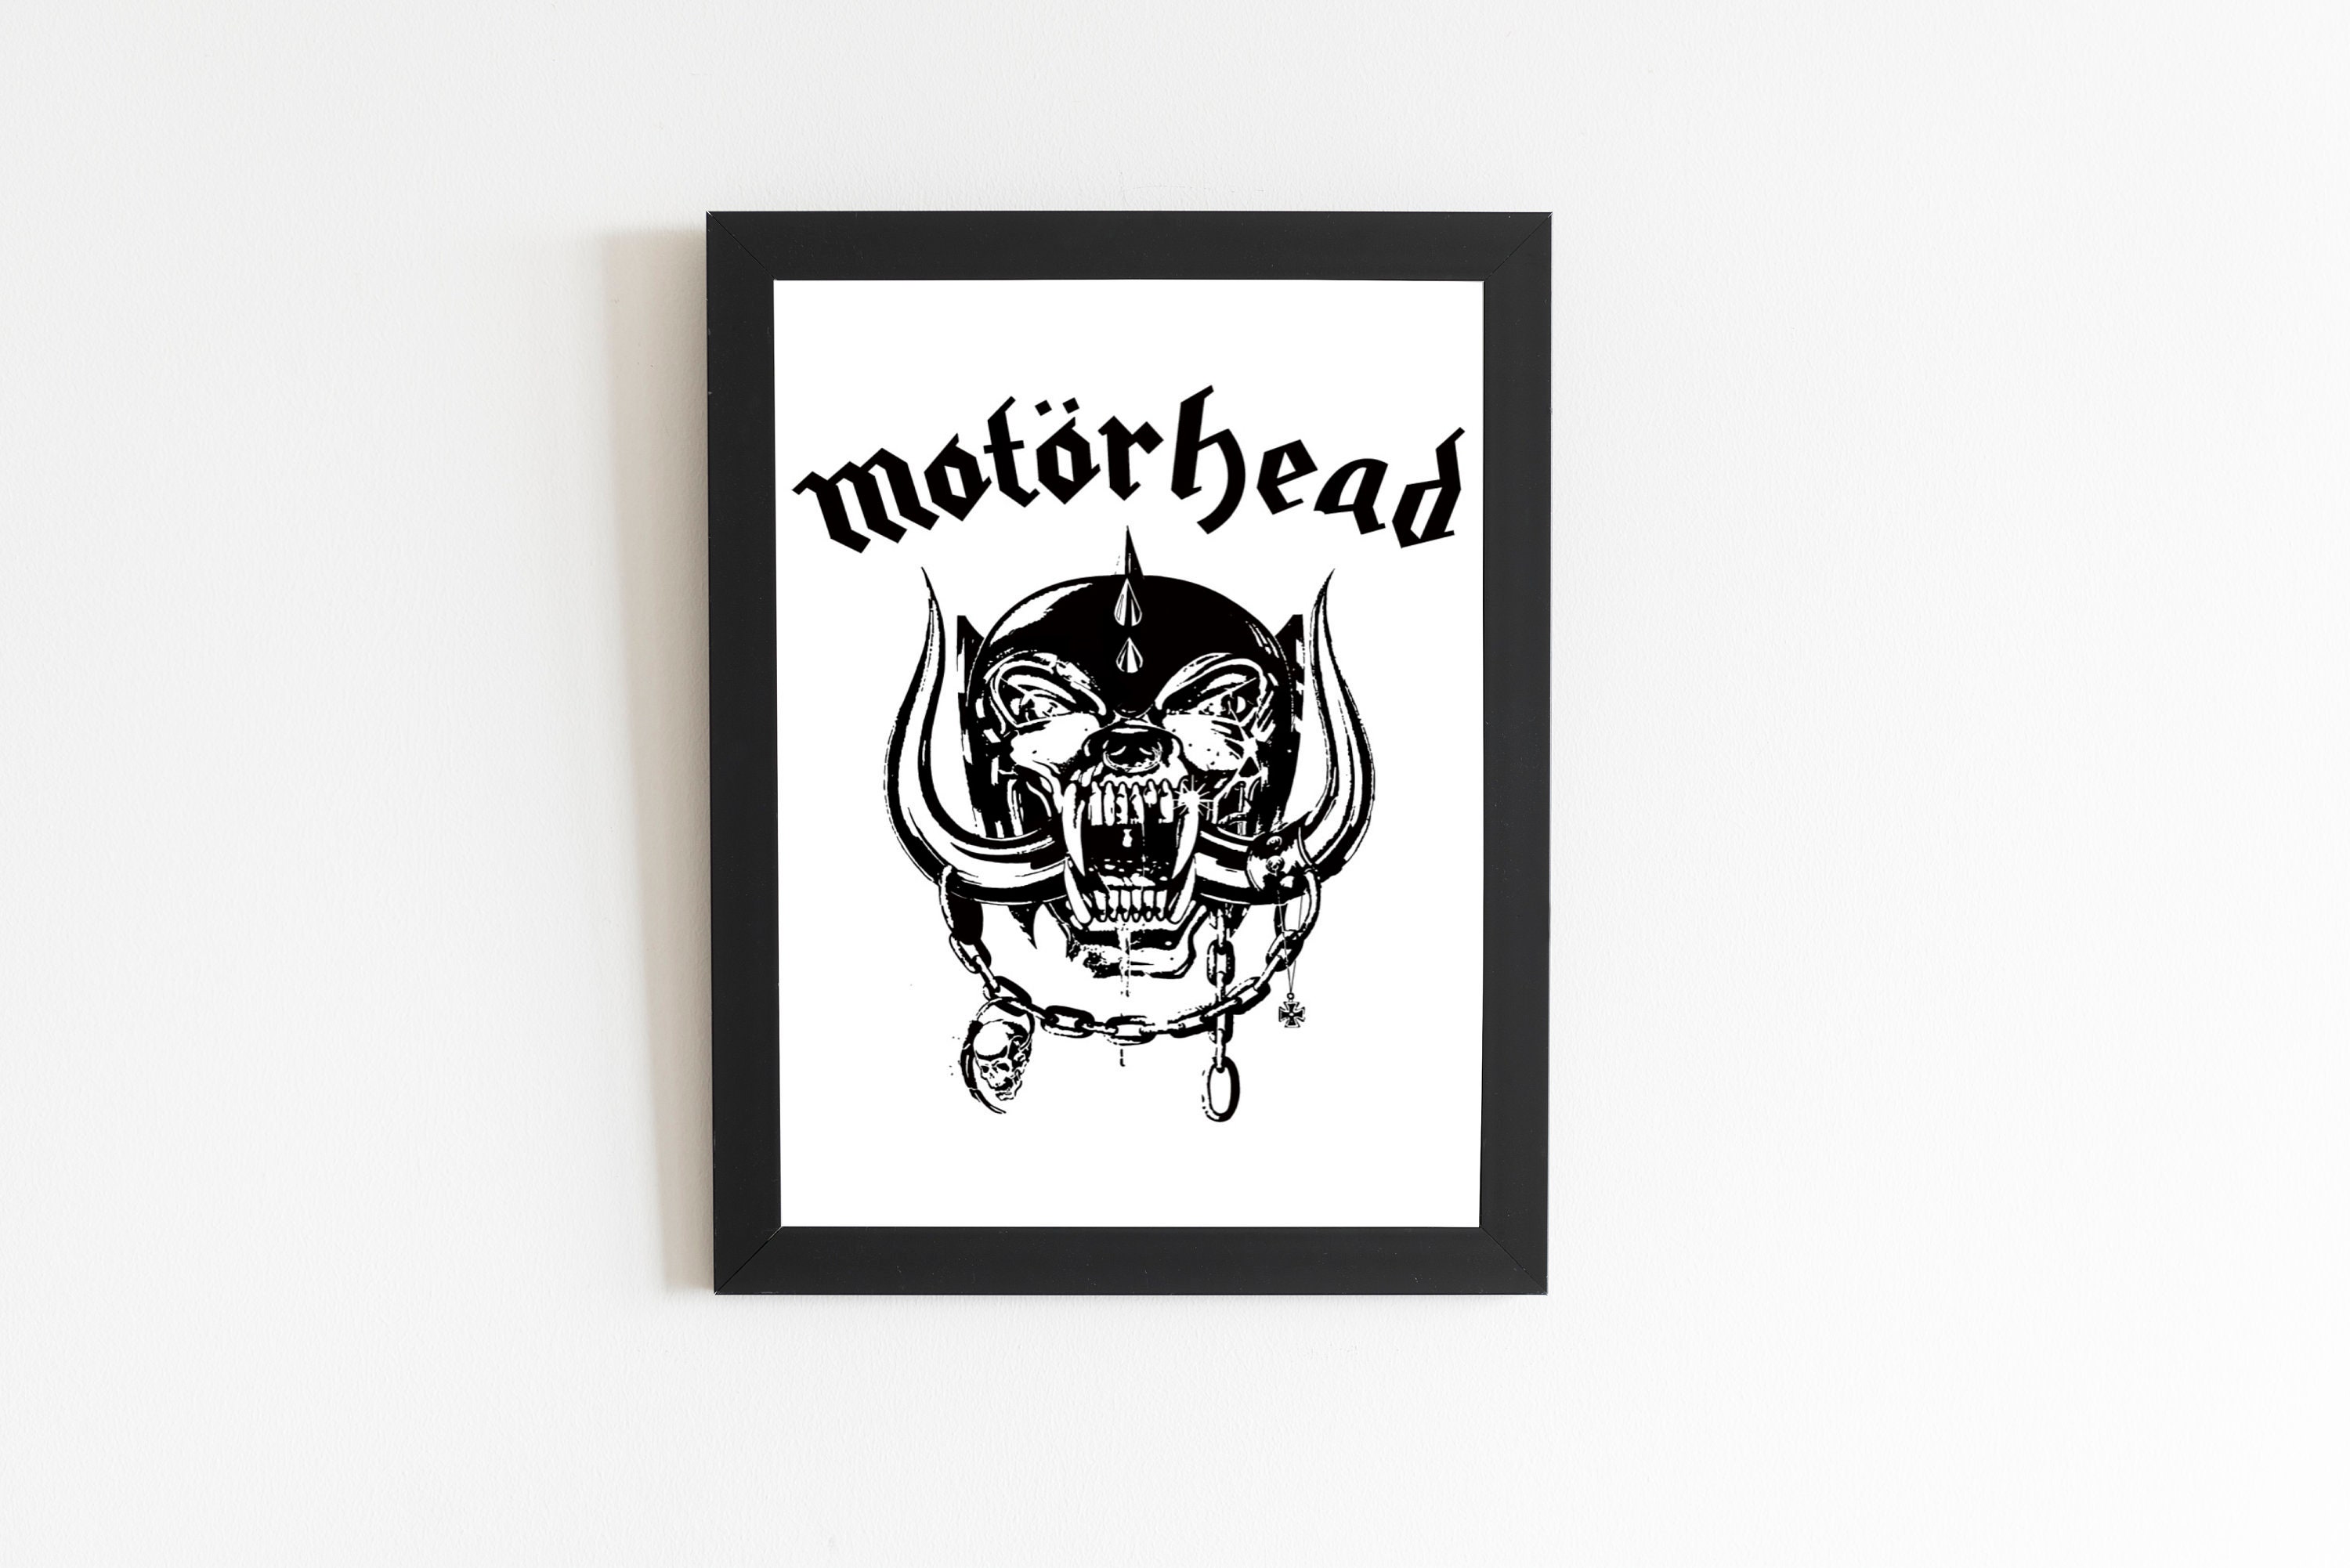 MotorHead Motorhead Domestic Poster 